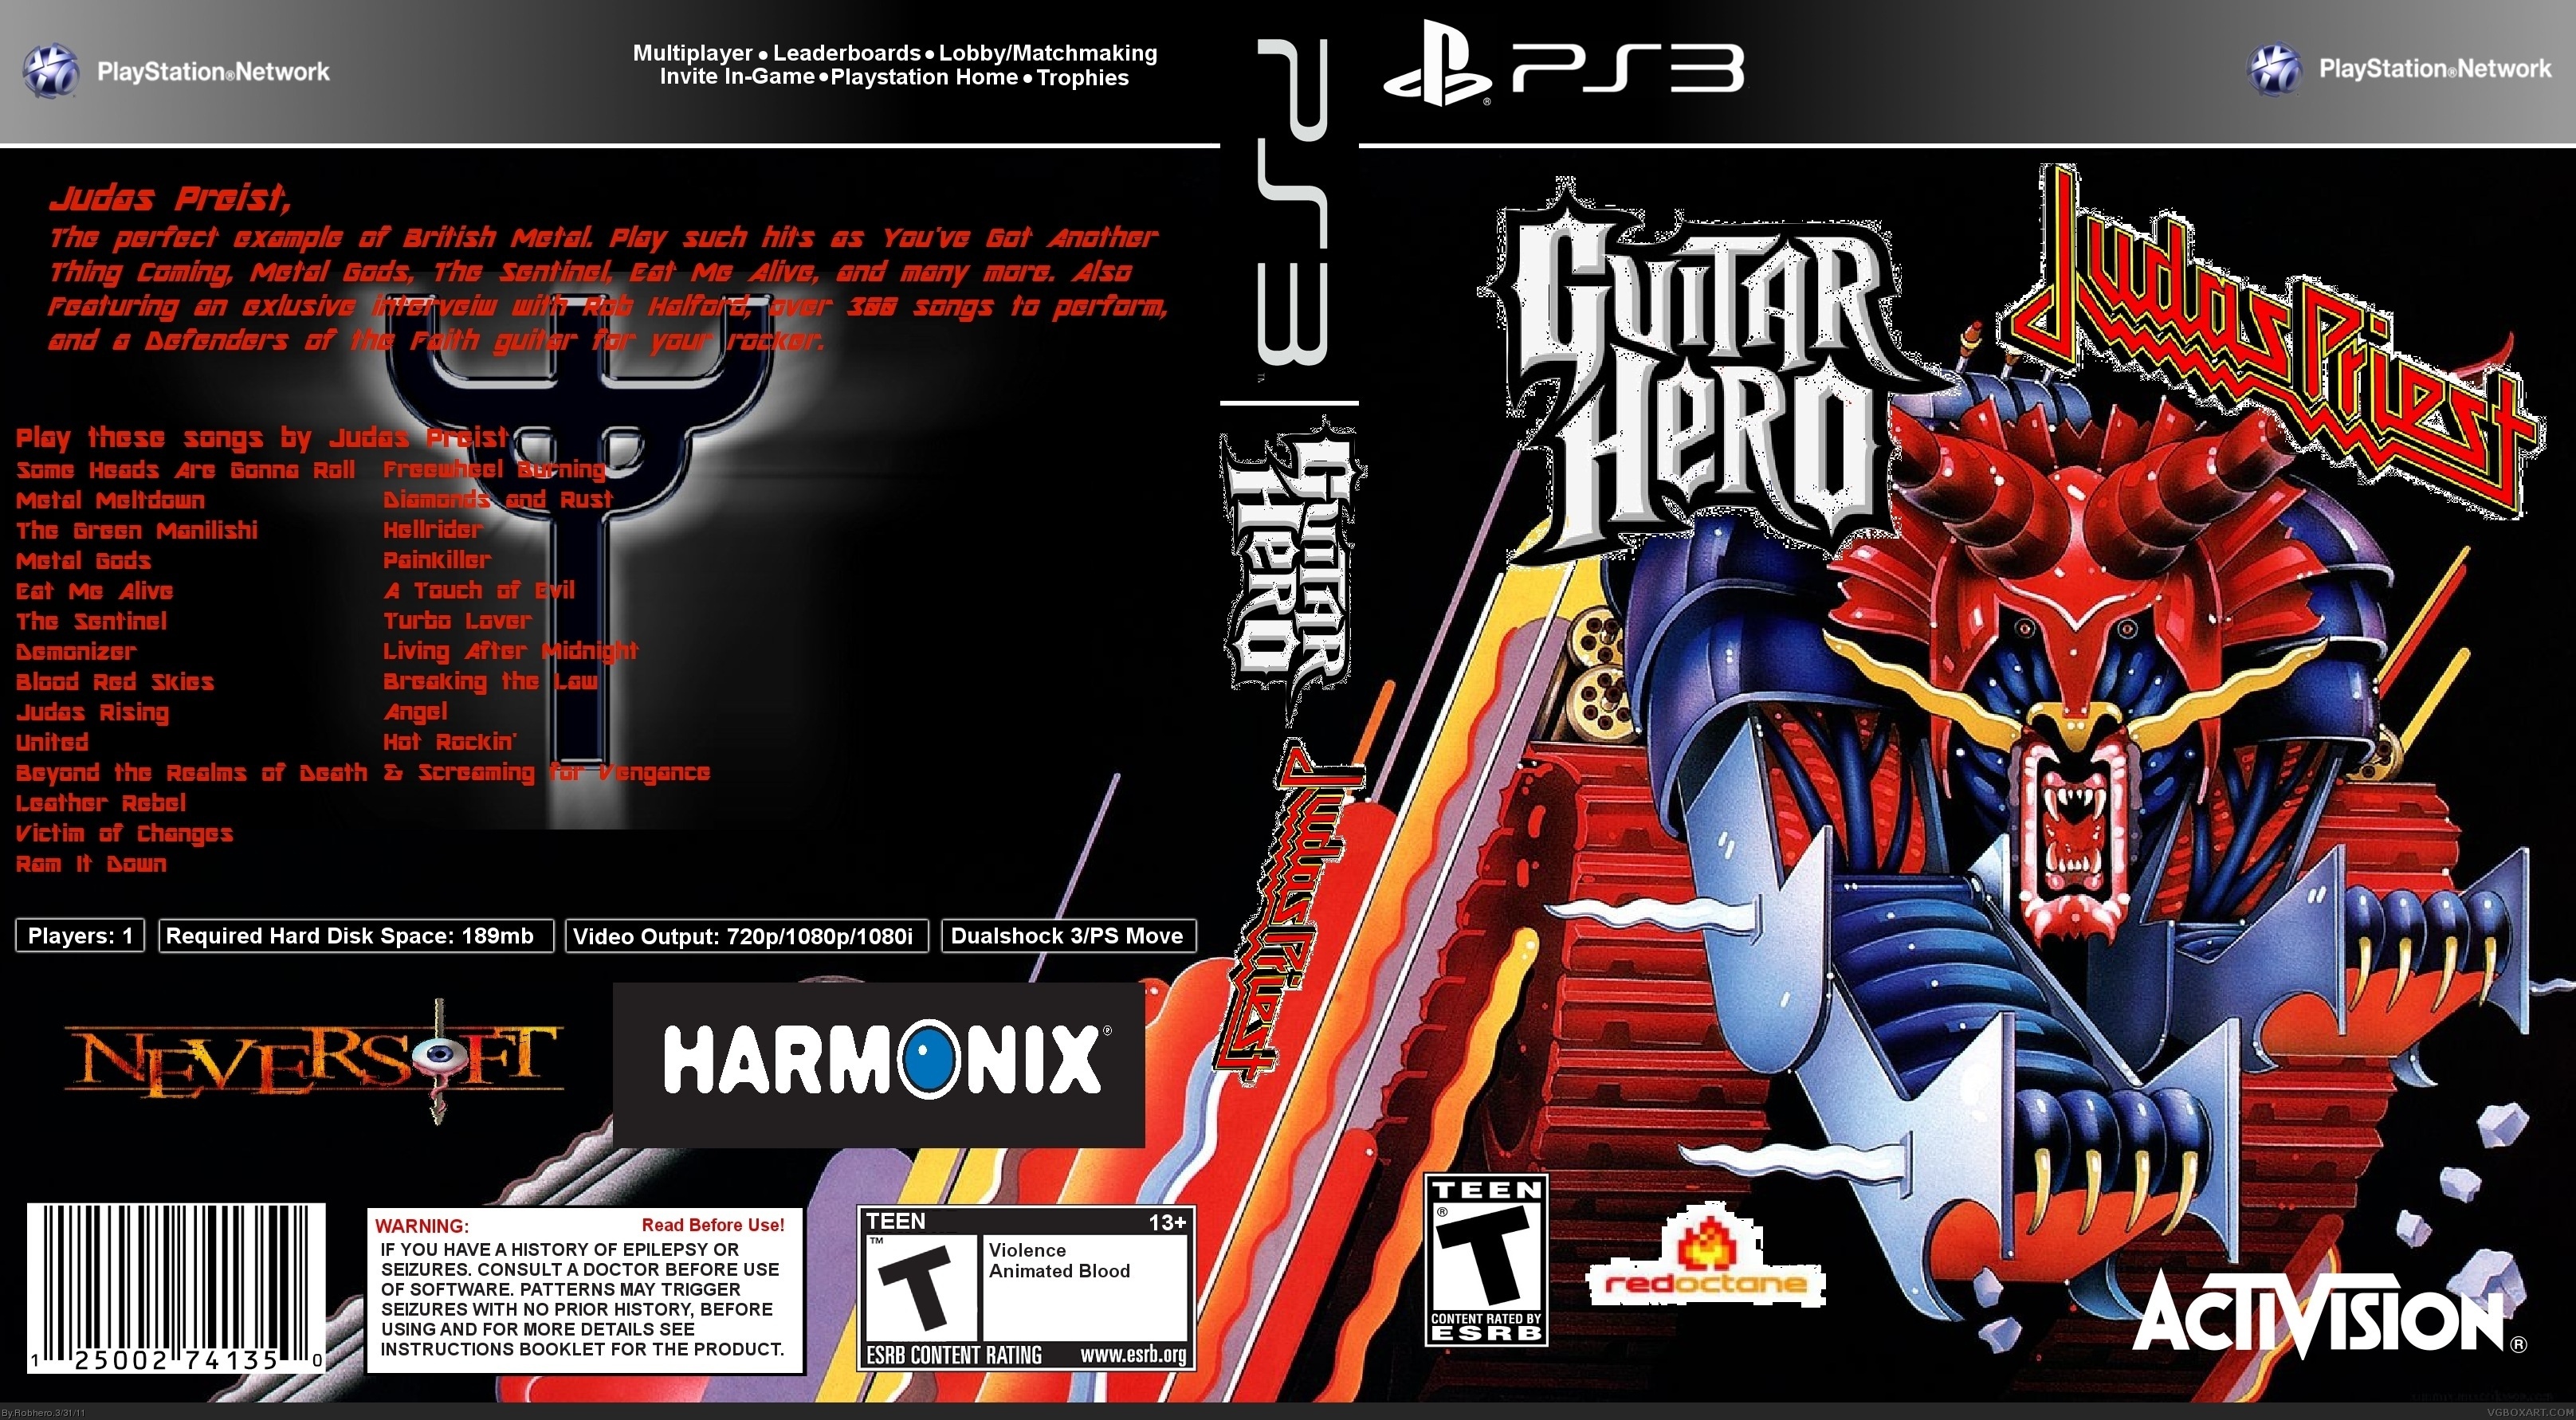 Guitar Hero Judas Preist box cover